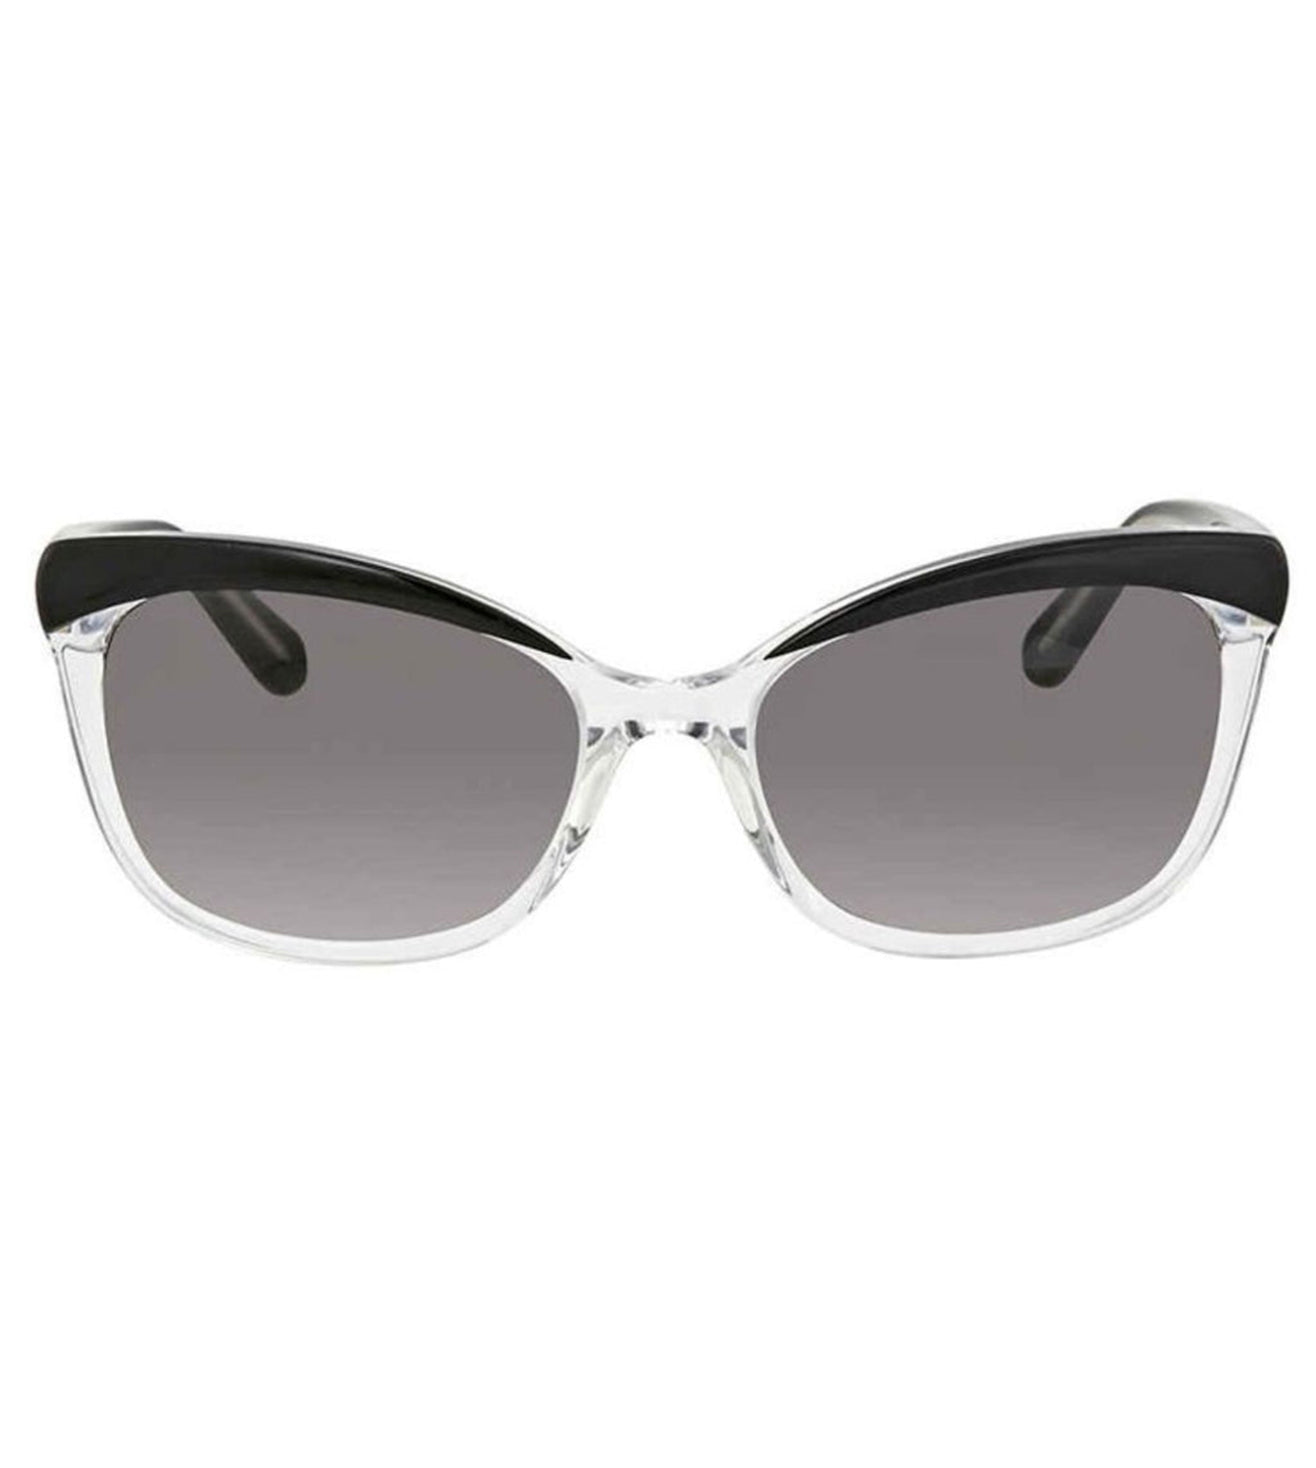 Kate Spade Women's Grey Cat-eye Sunglasses